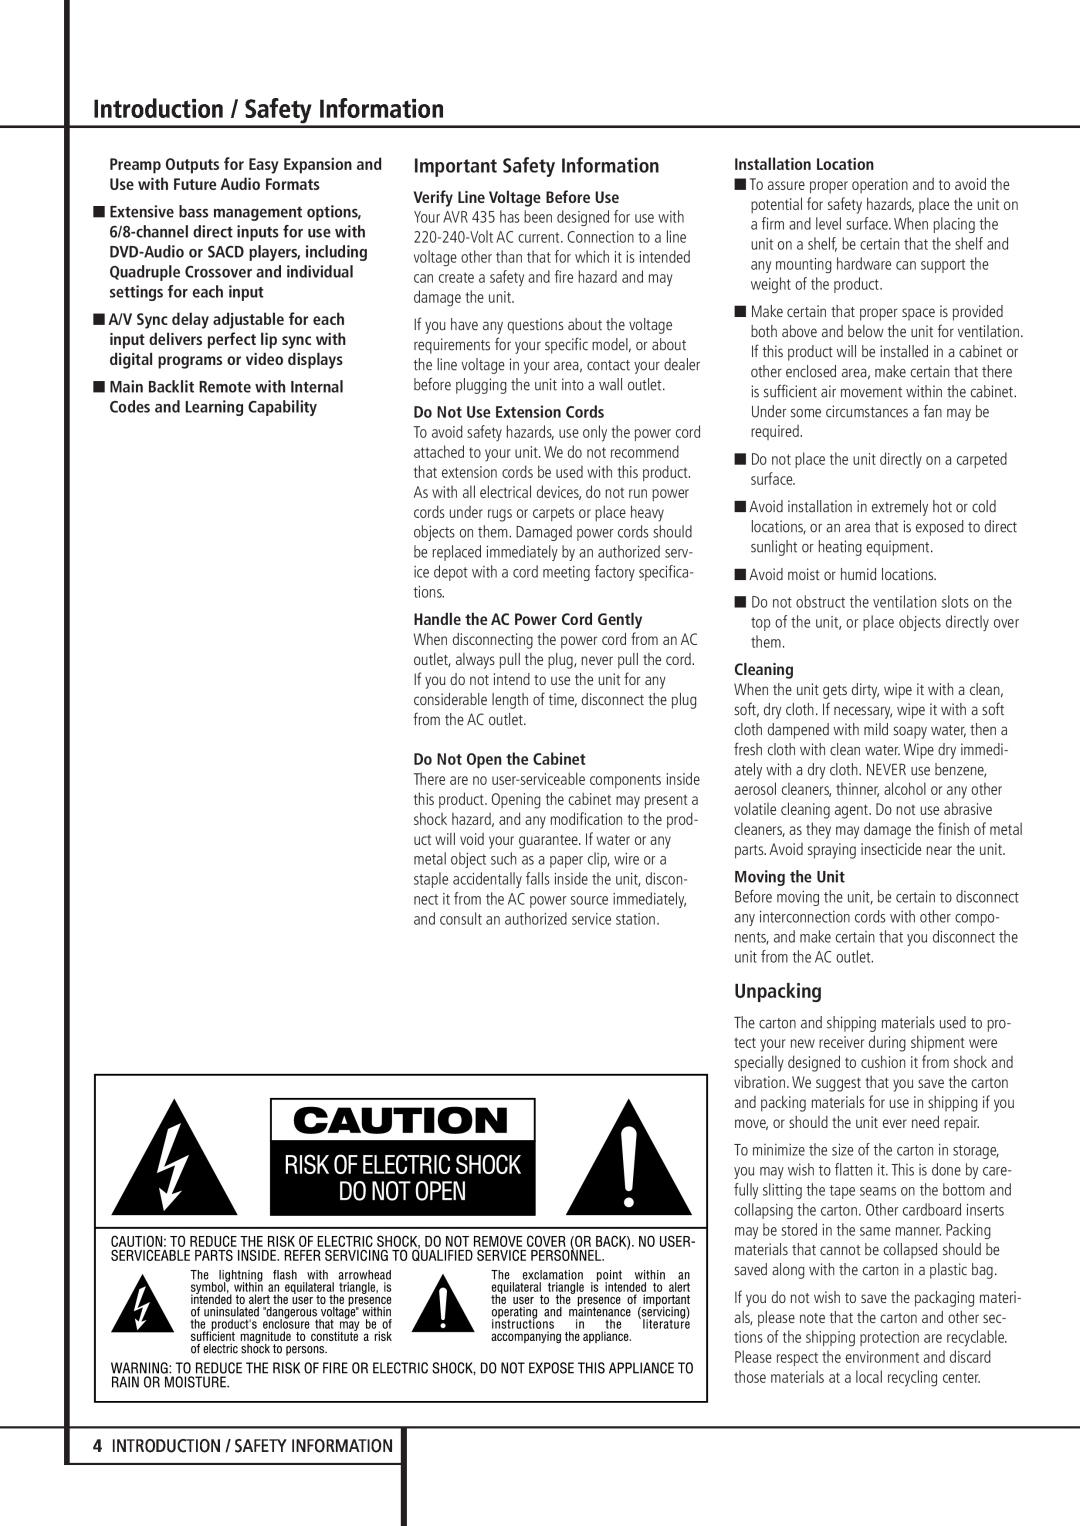 Harman-Kardon AVR 435 Introduction / Safety Information, Important Safety Information, Unpacking, Do Not Open the Cabinet 